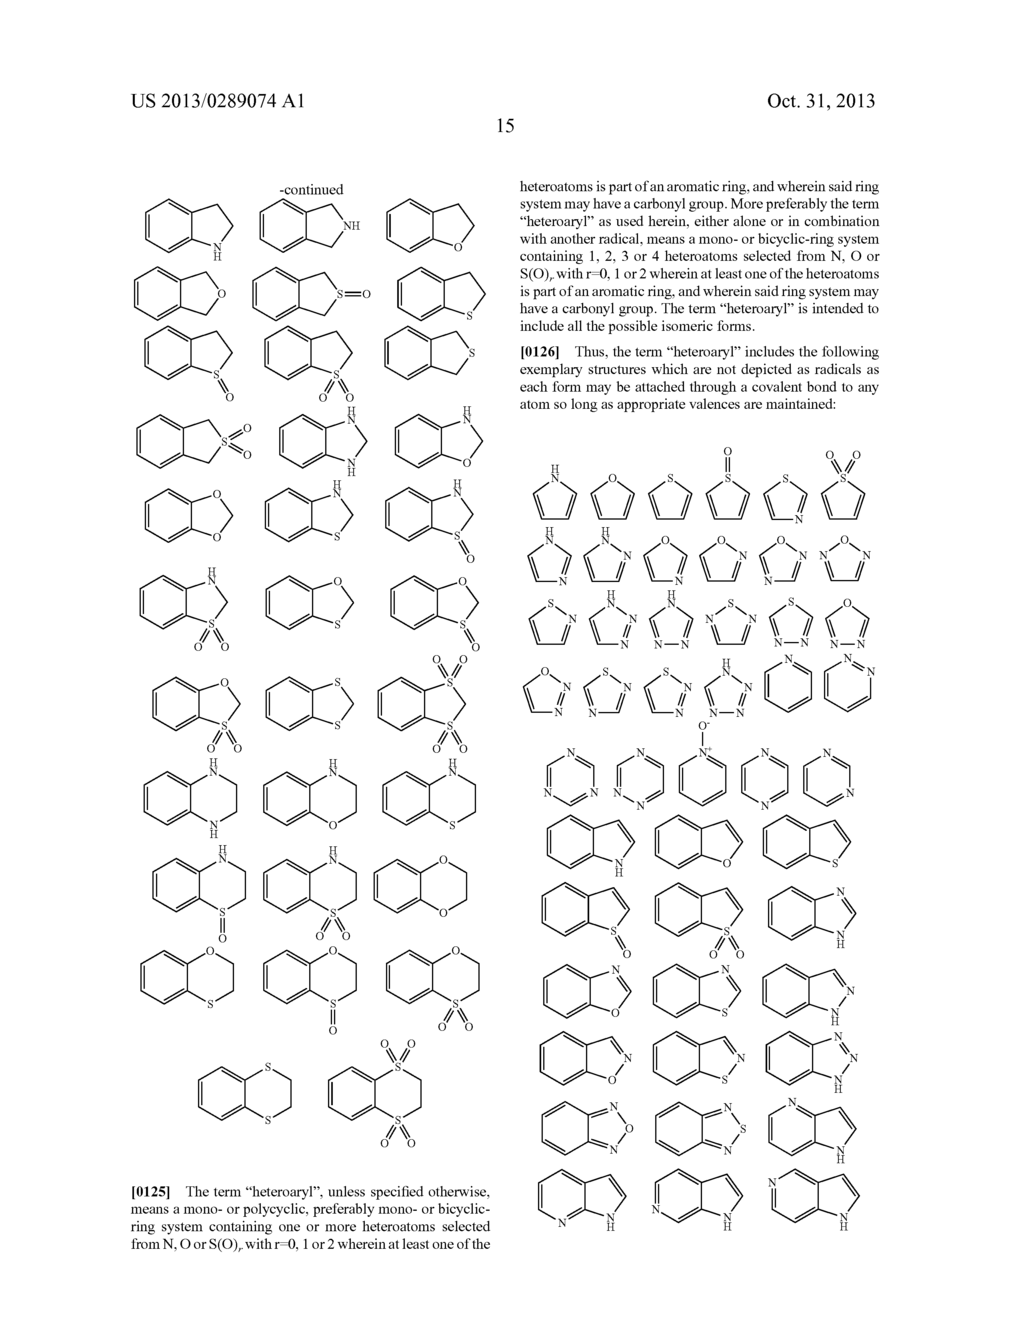 NEW INDANYLOXYDIHYDROBENZOFURANYLACETIC ACIDS - diagram, schematic, and image 16